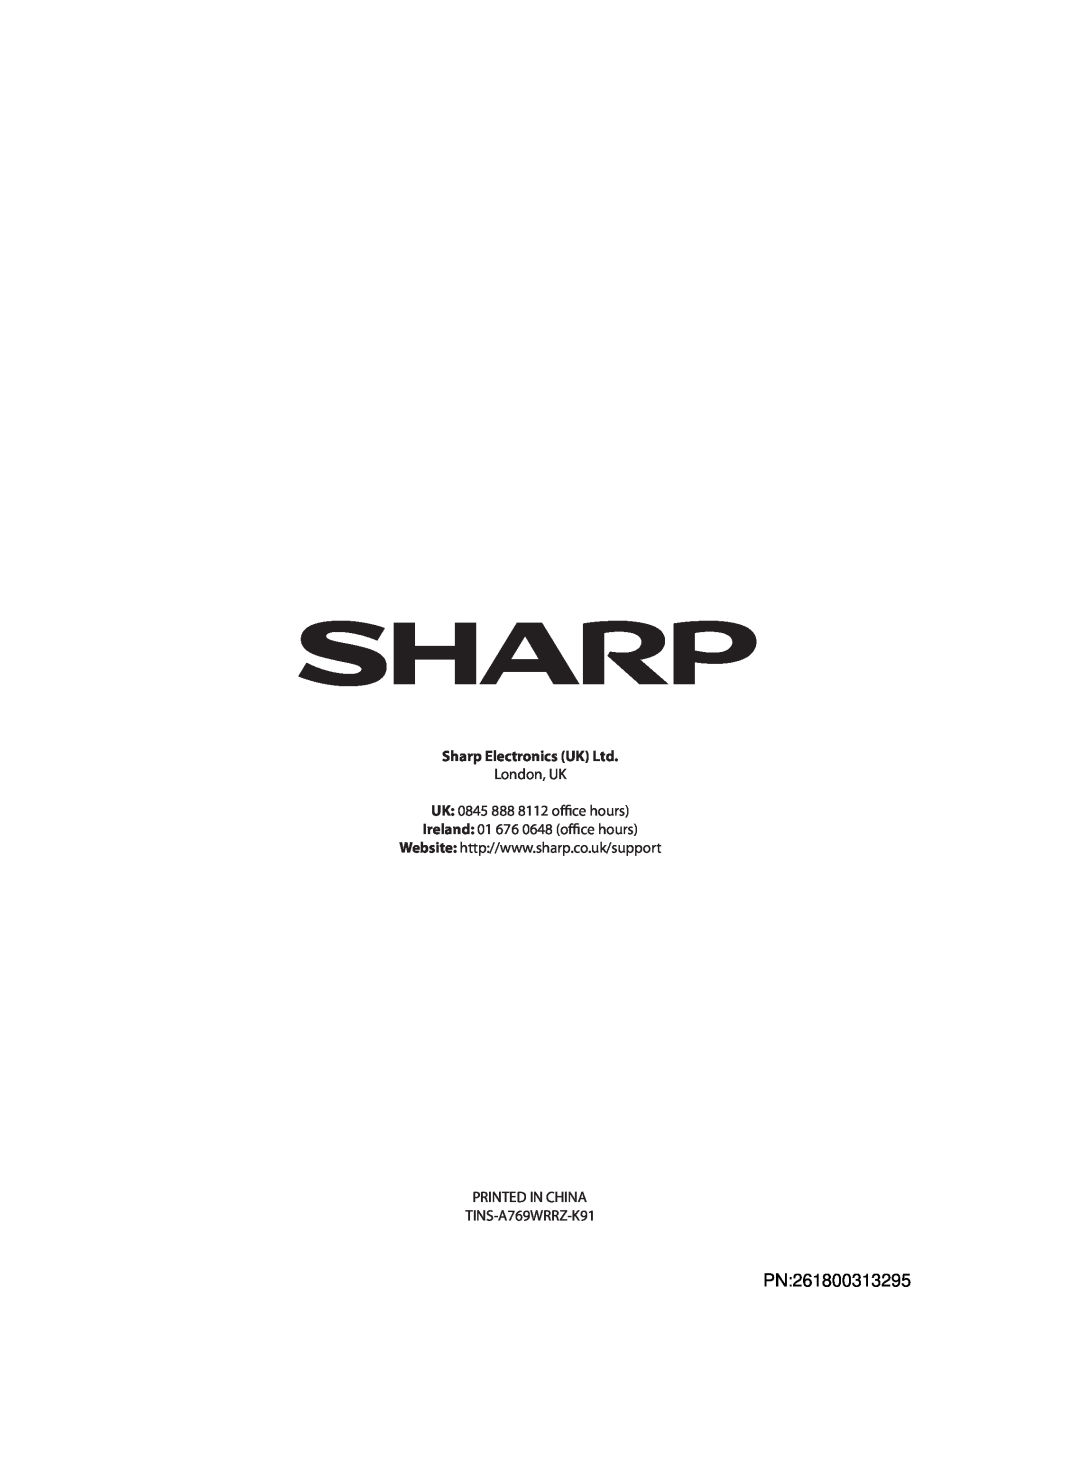 Sharp R-92STM operation manual PN261800313295, London, UK 